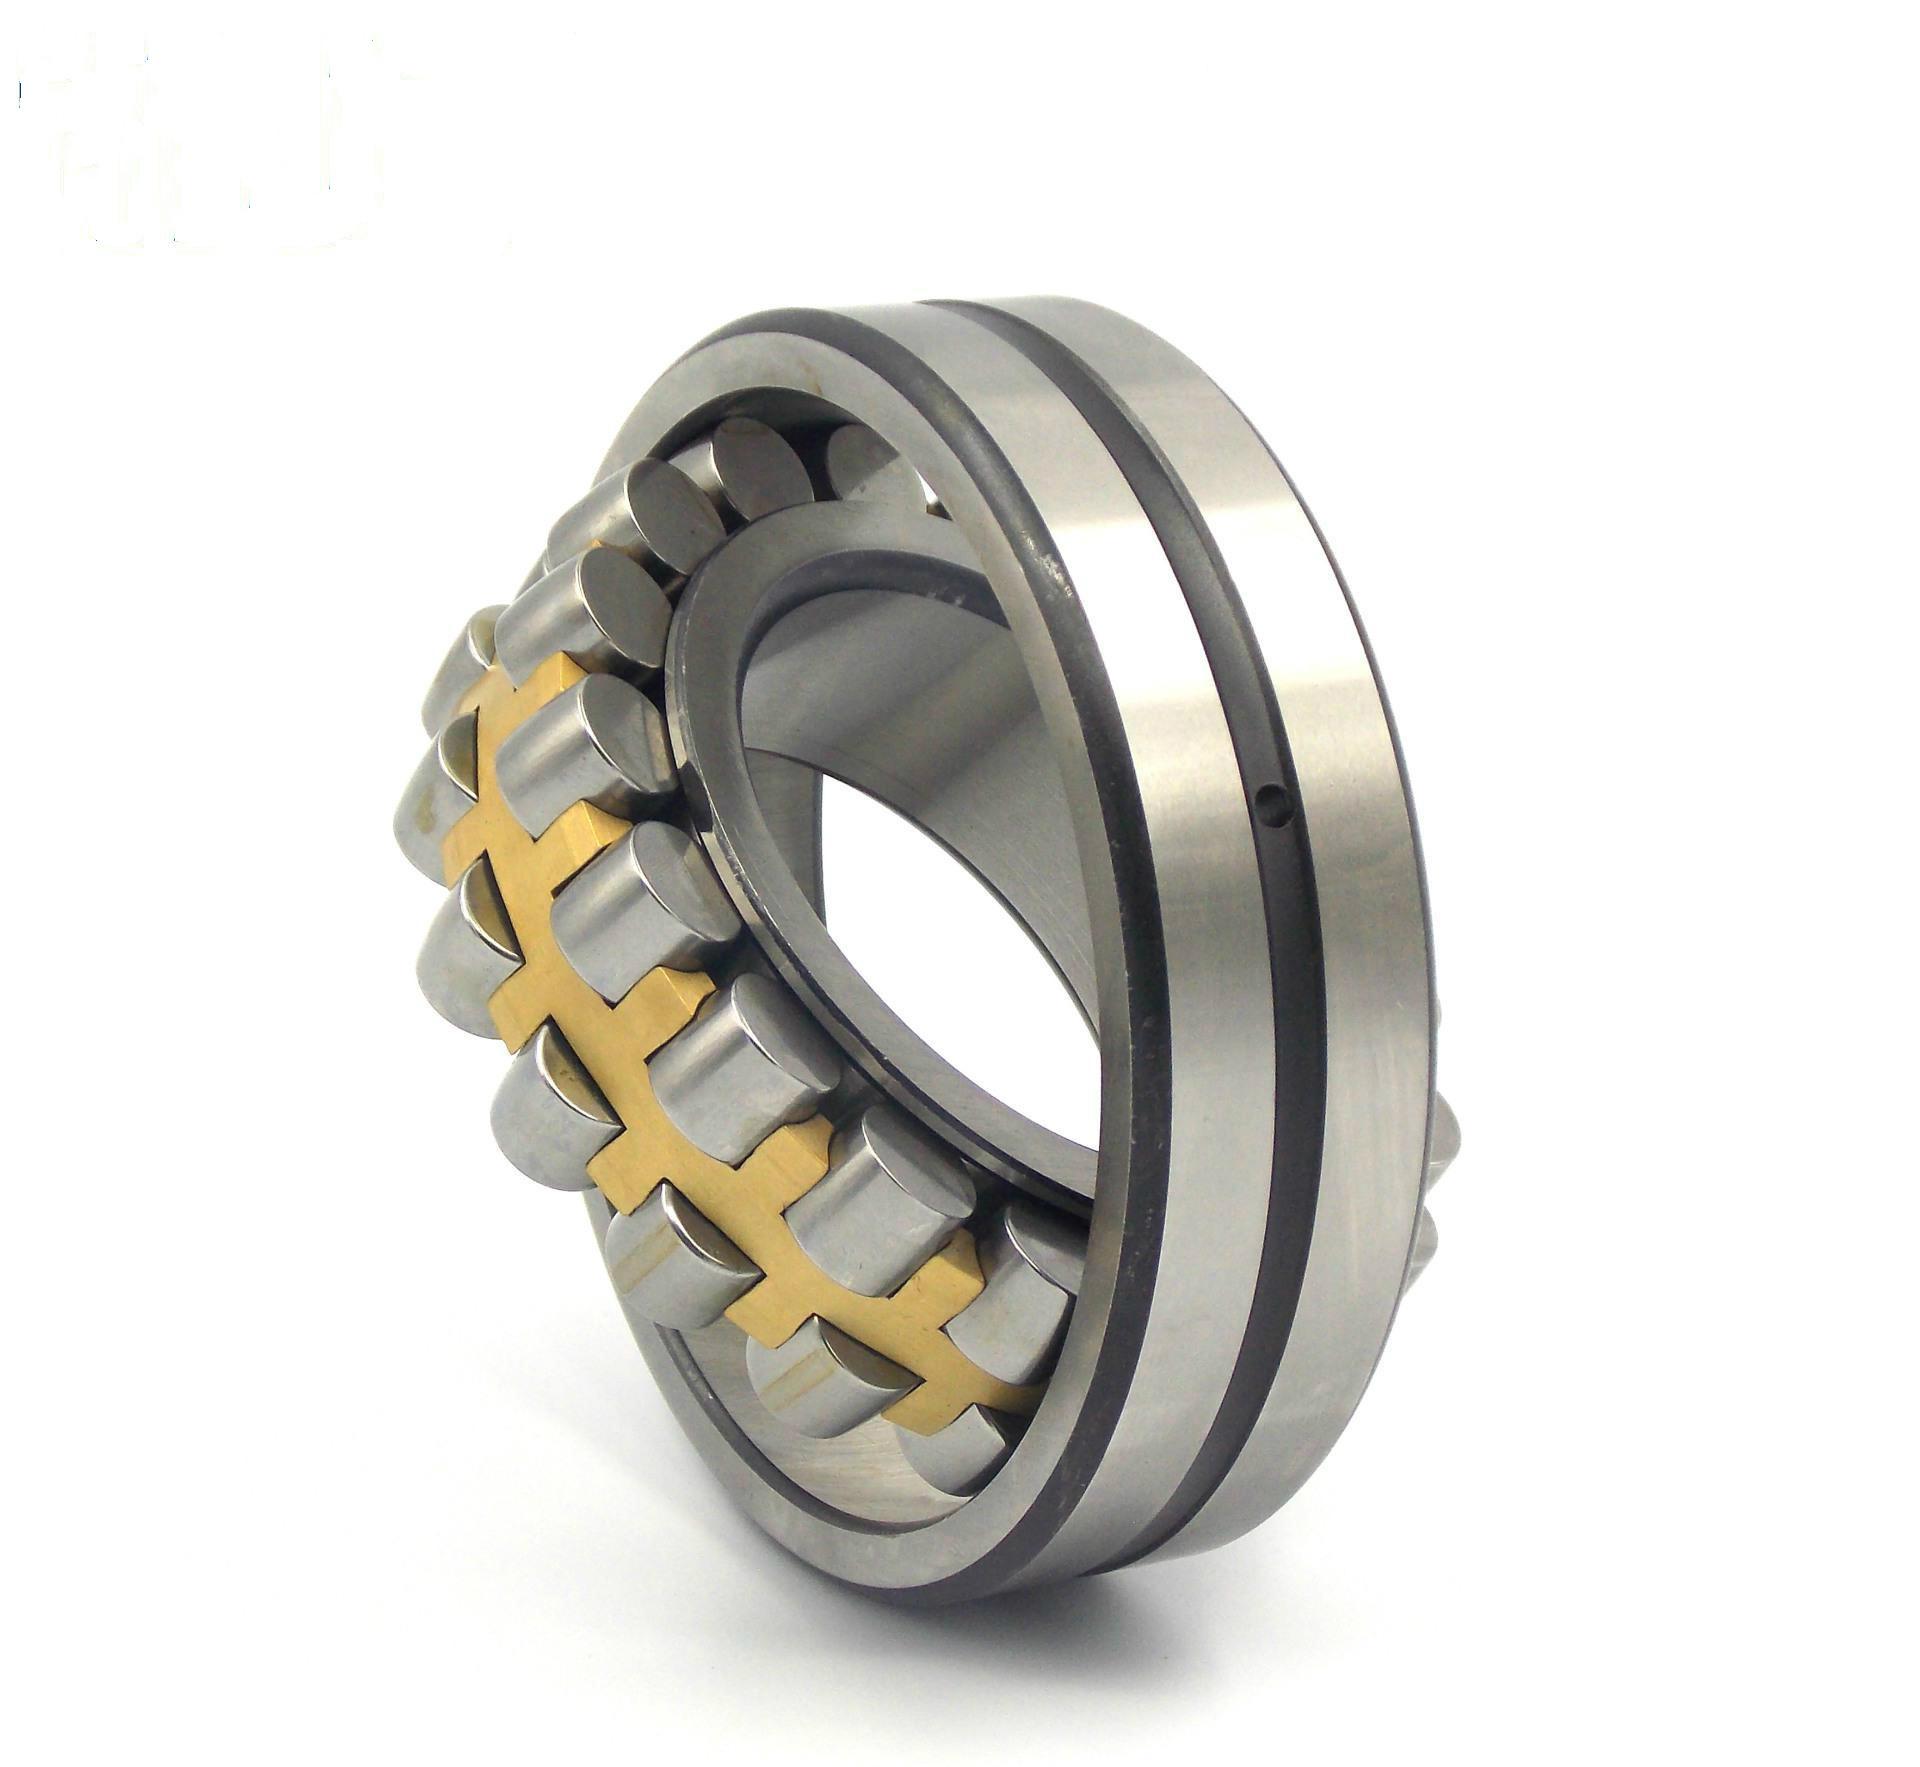  NJ 2222 J Cylindrical roller bearing